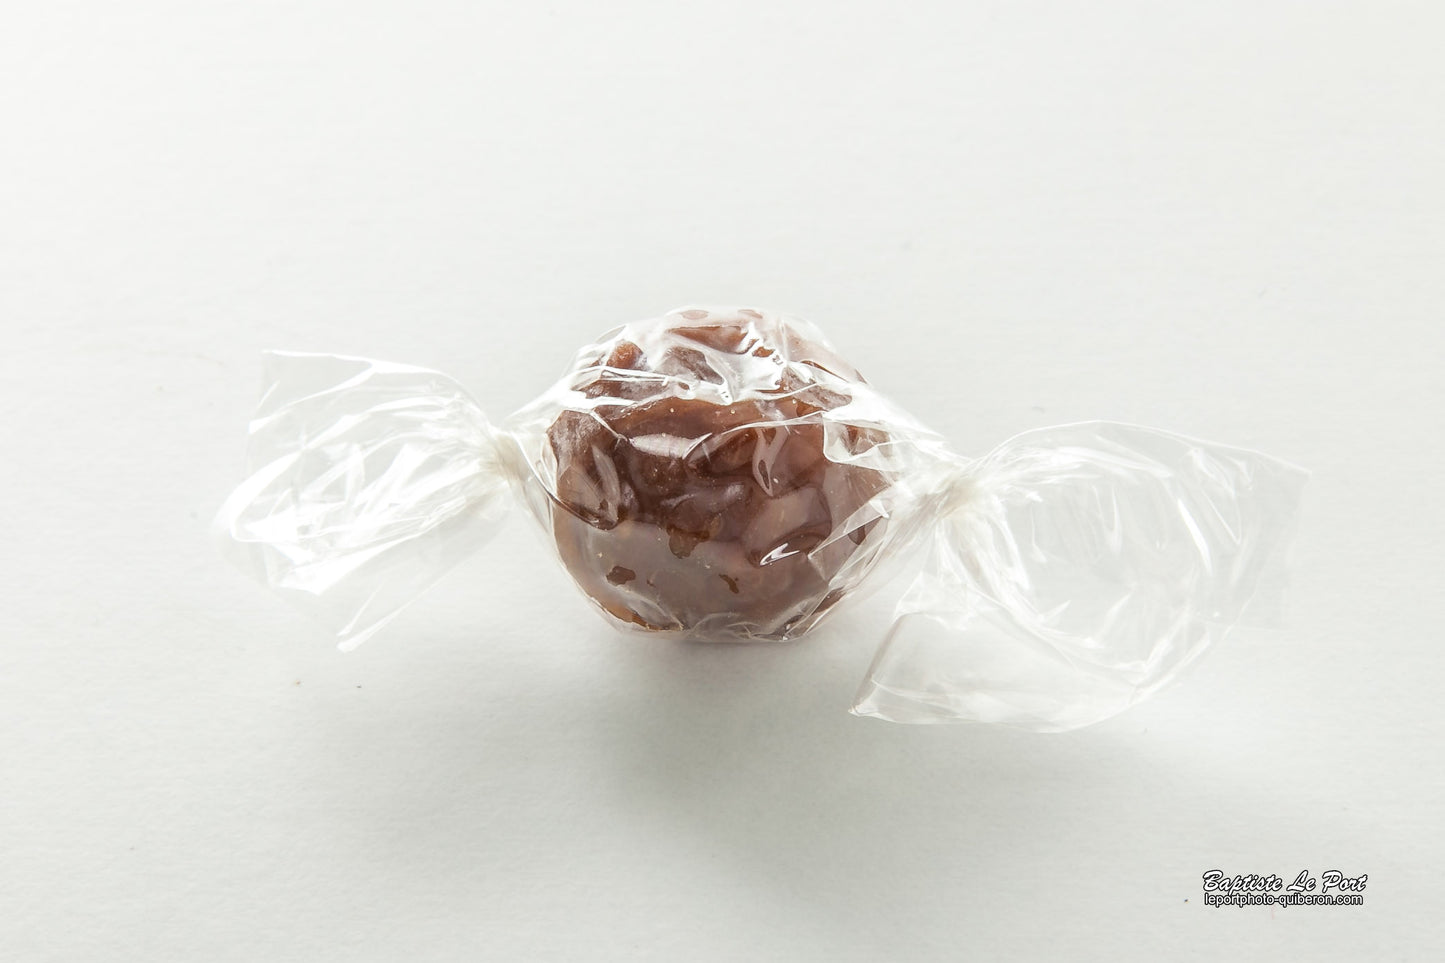 Mam Bio (Maison D'armorine) -- Mini-bonbons caramel dur bio (papier homecompost) Vrac